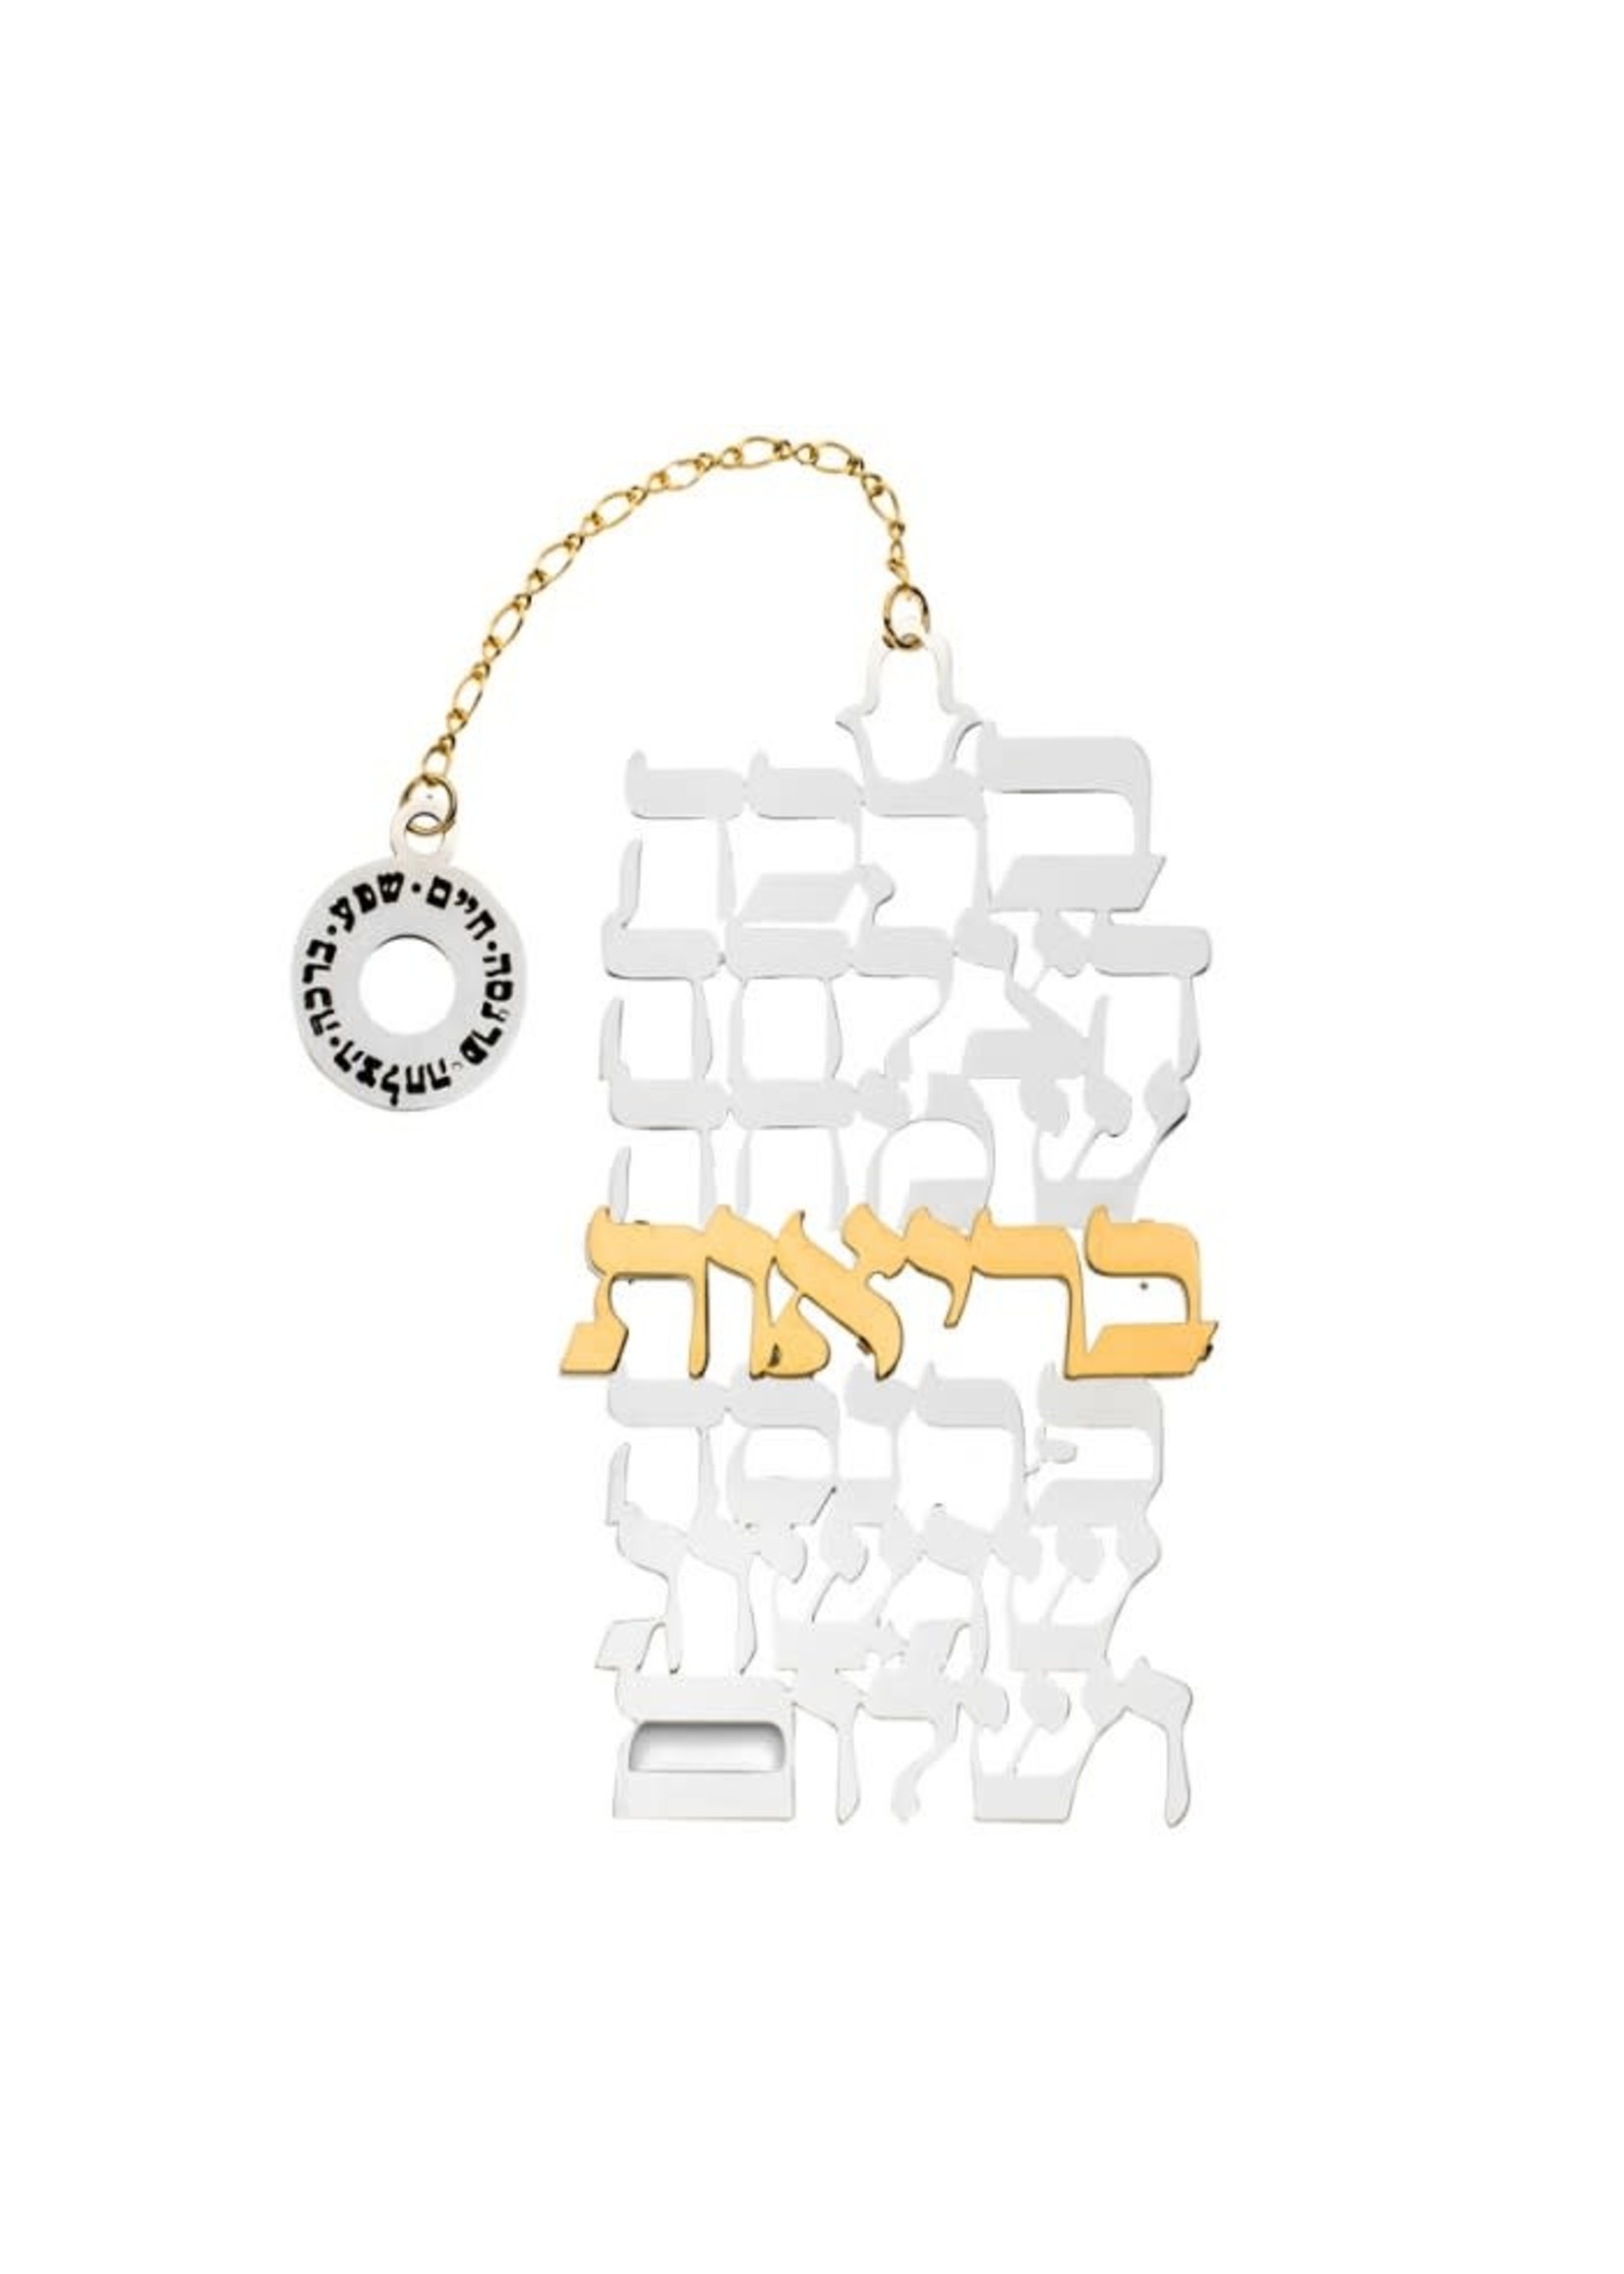 SEVEN BLESSINGS HEBREW GOLD